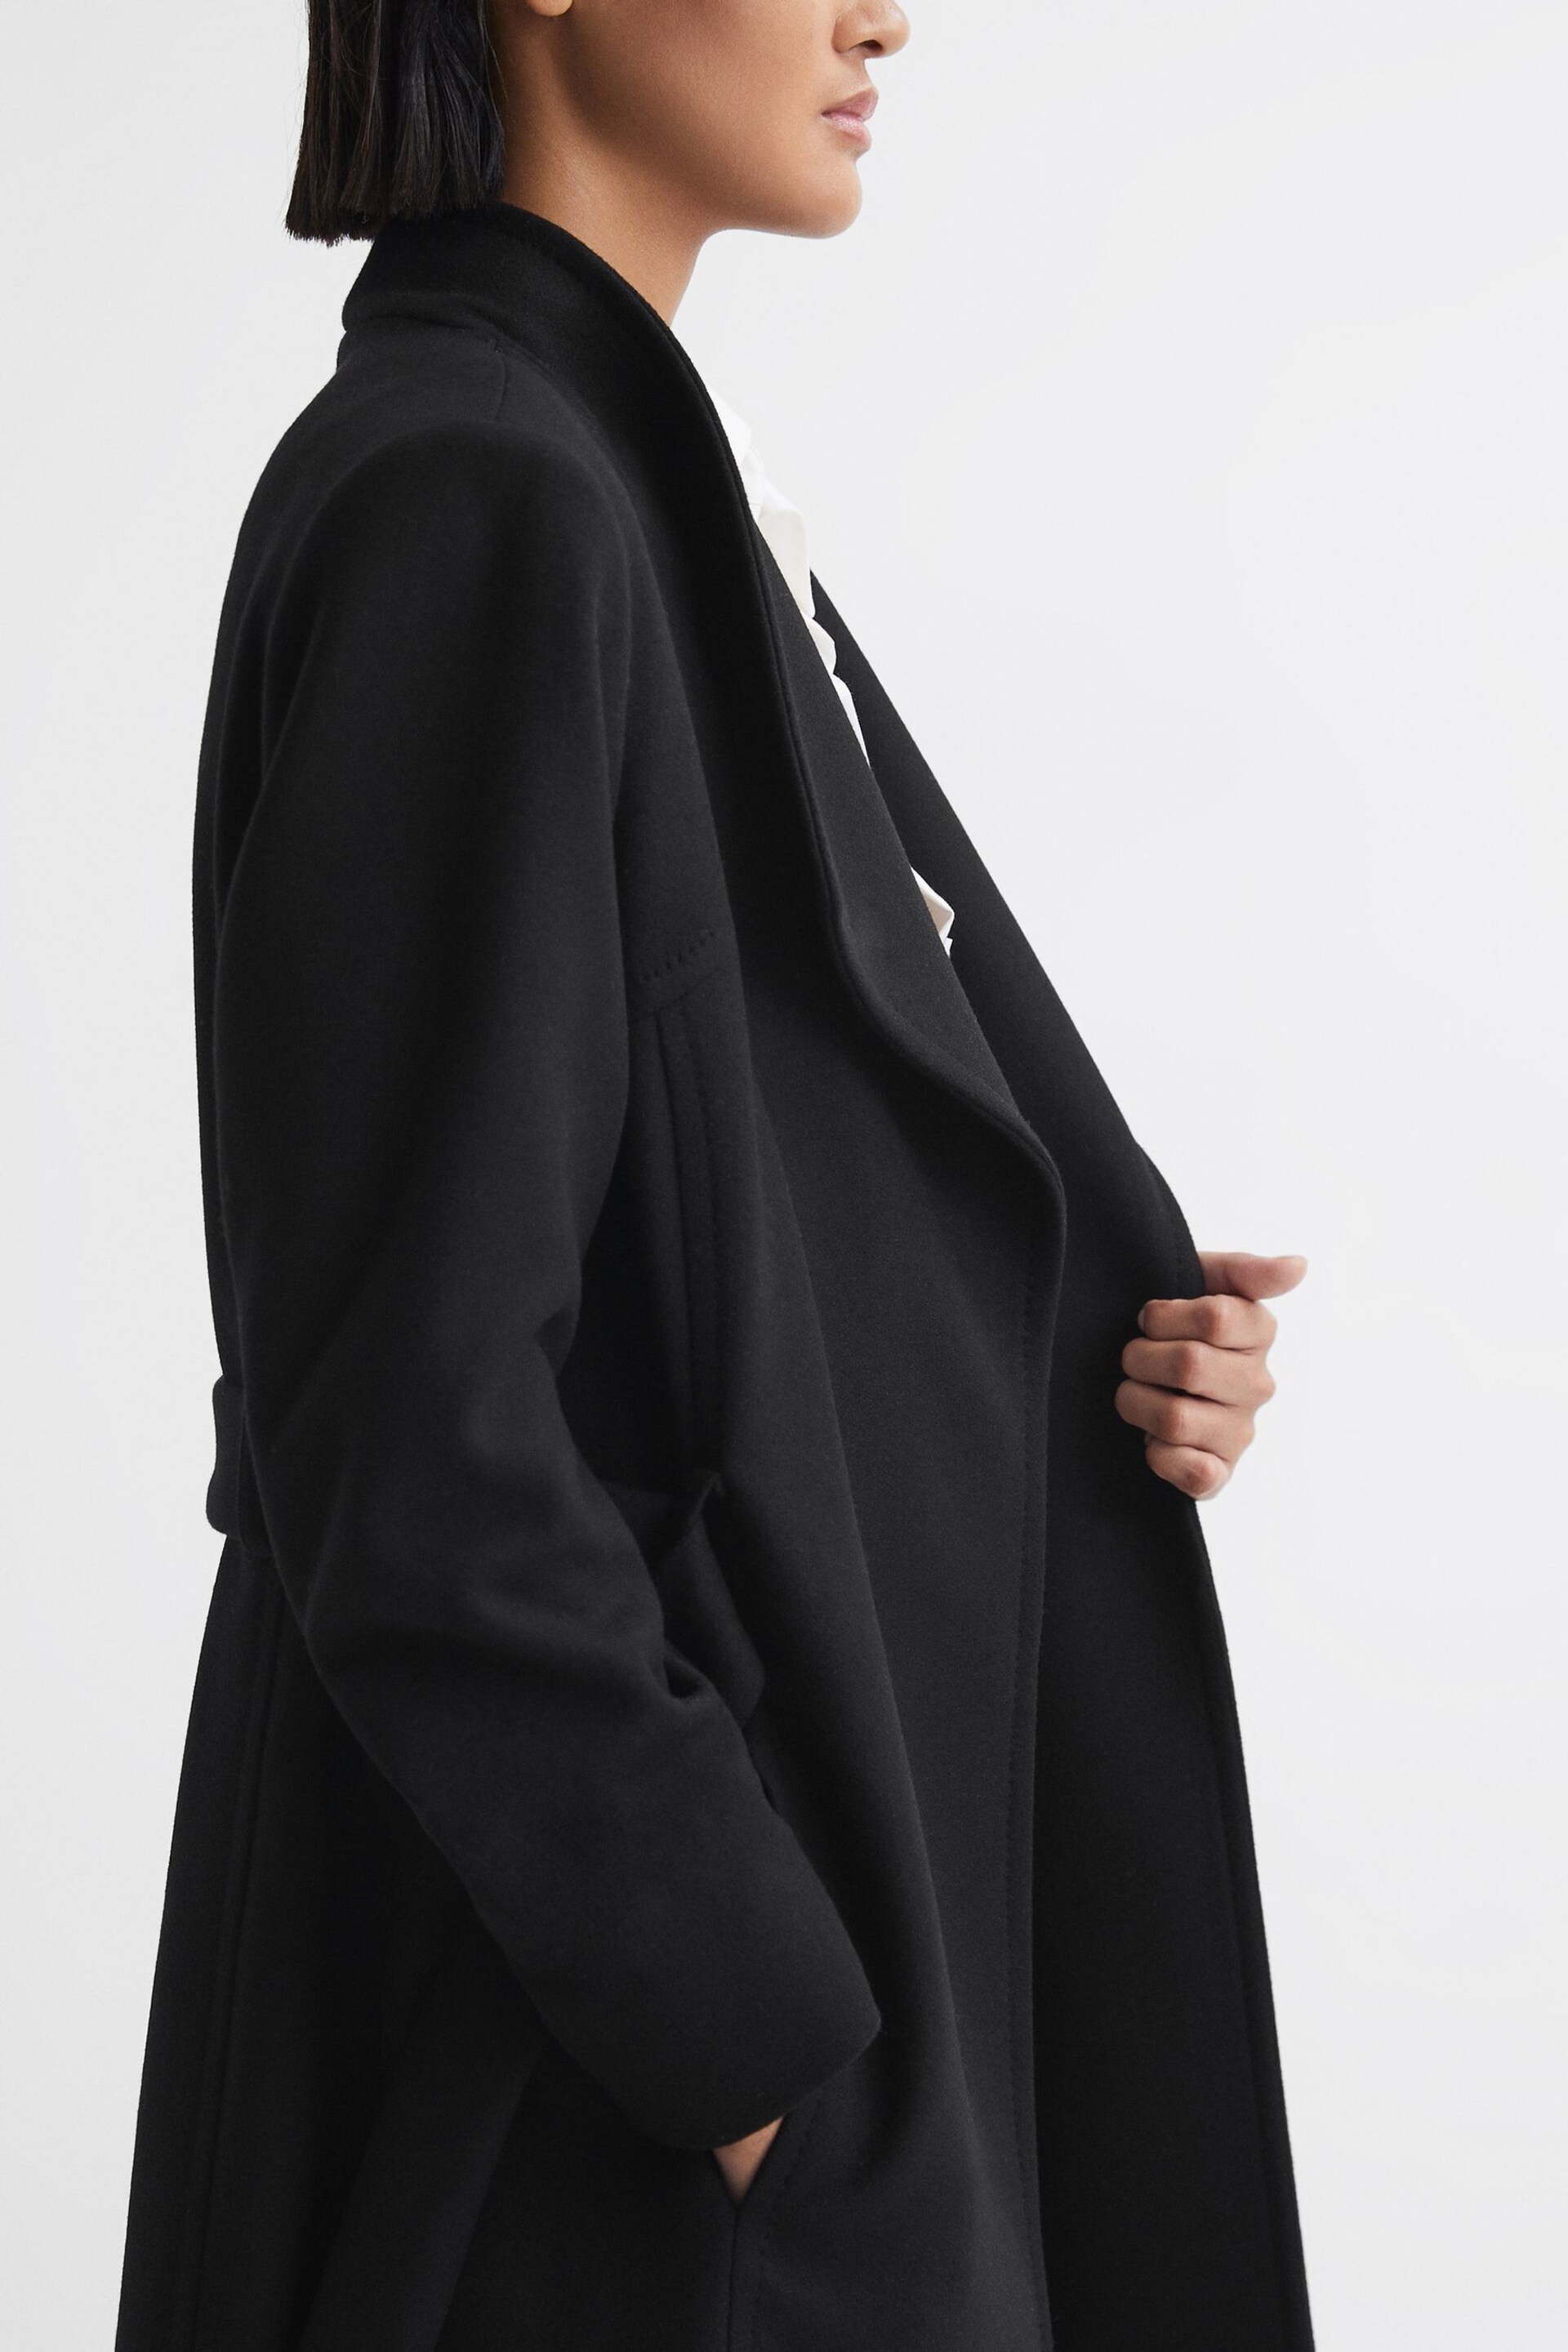 Reiss Black Freja Tailored Wool Blend Longline Coat - Image 5 of 6